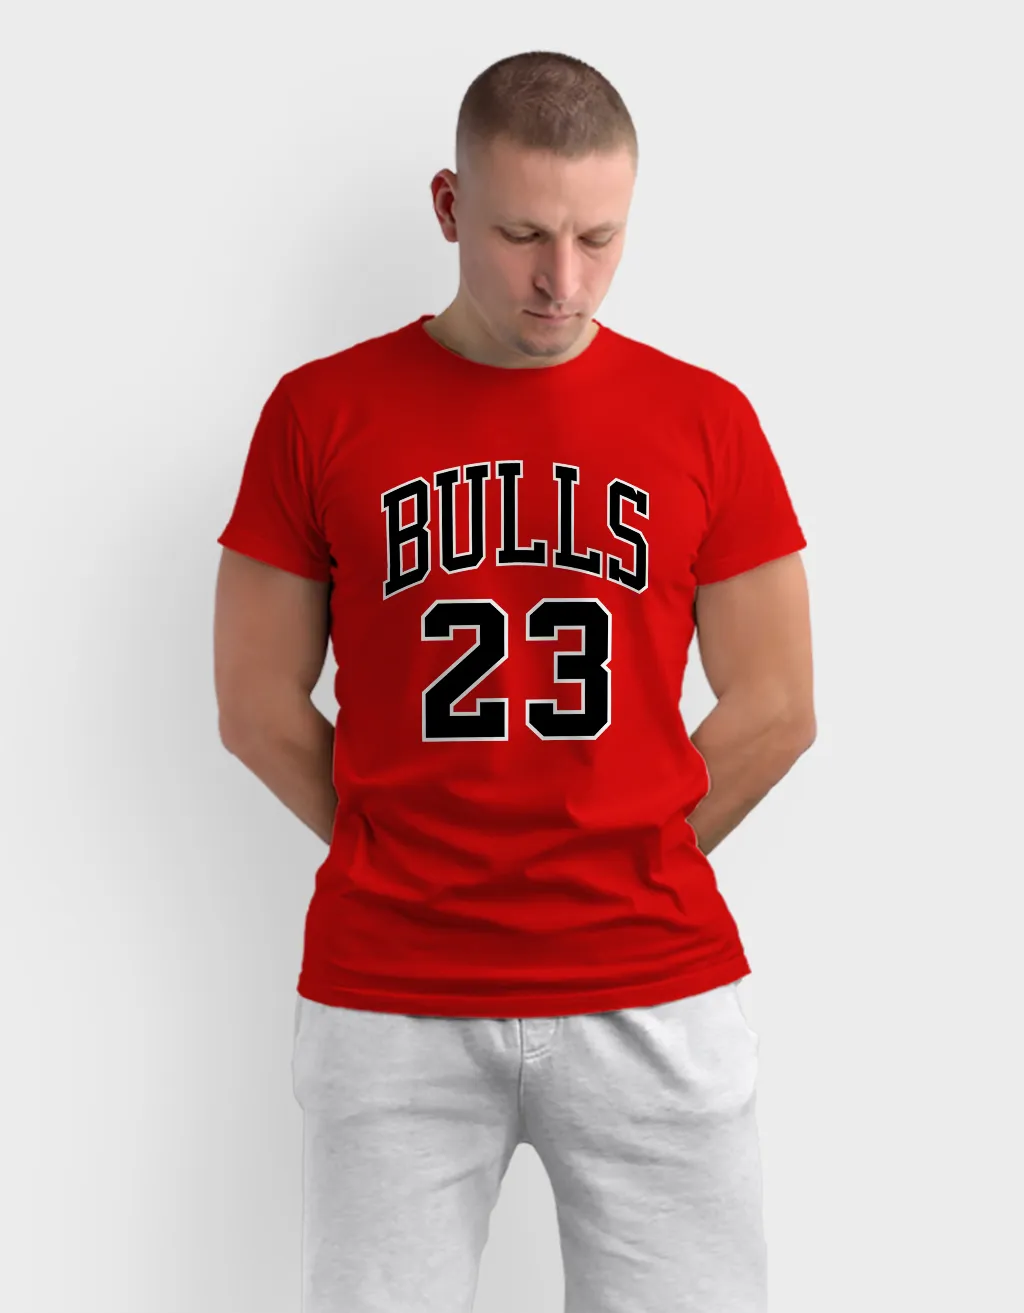 Buy Chicago Bulls T shirt For Men and Women Online in India